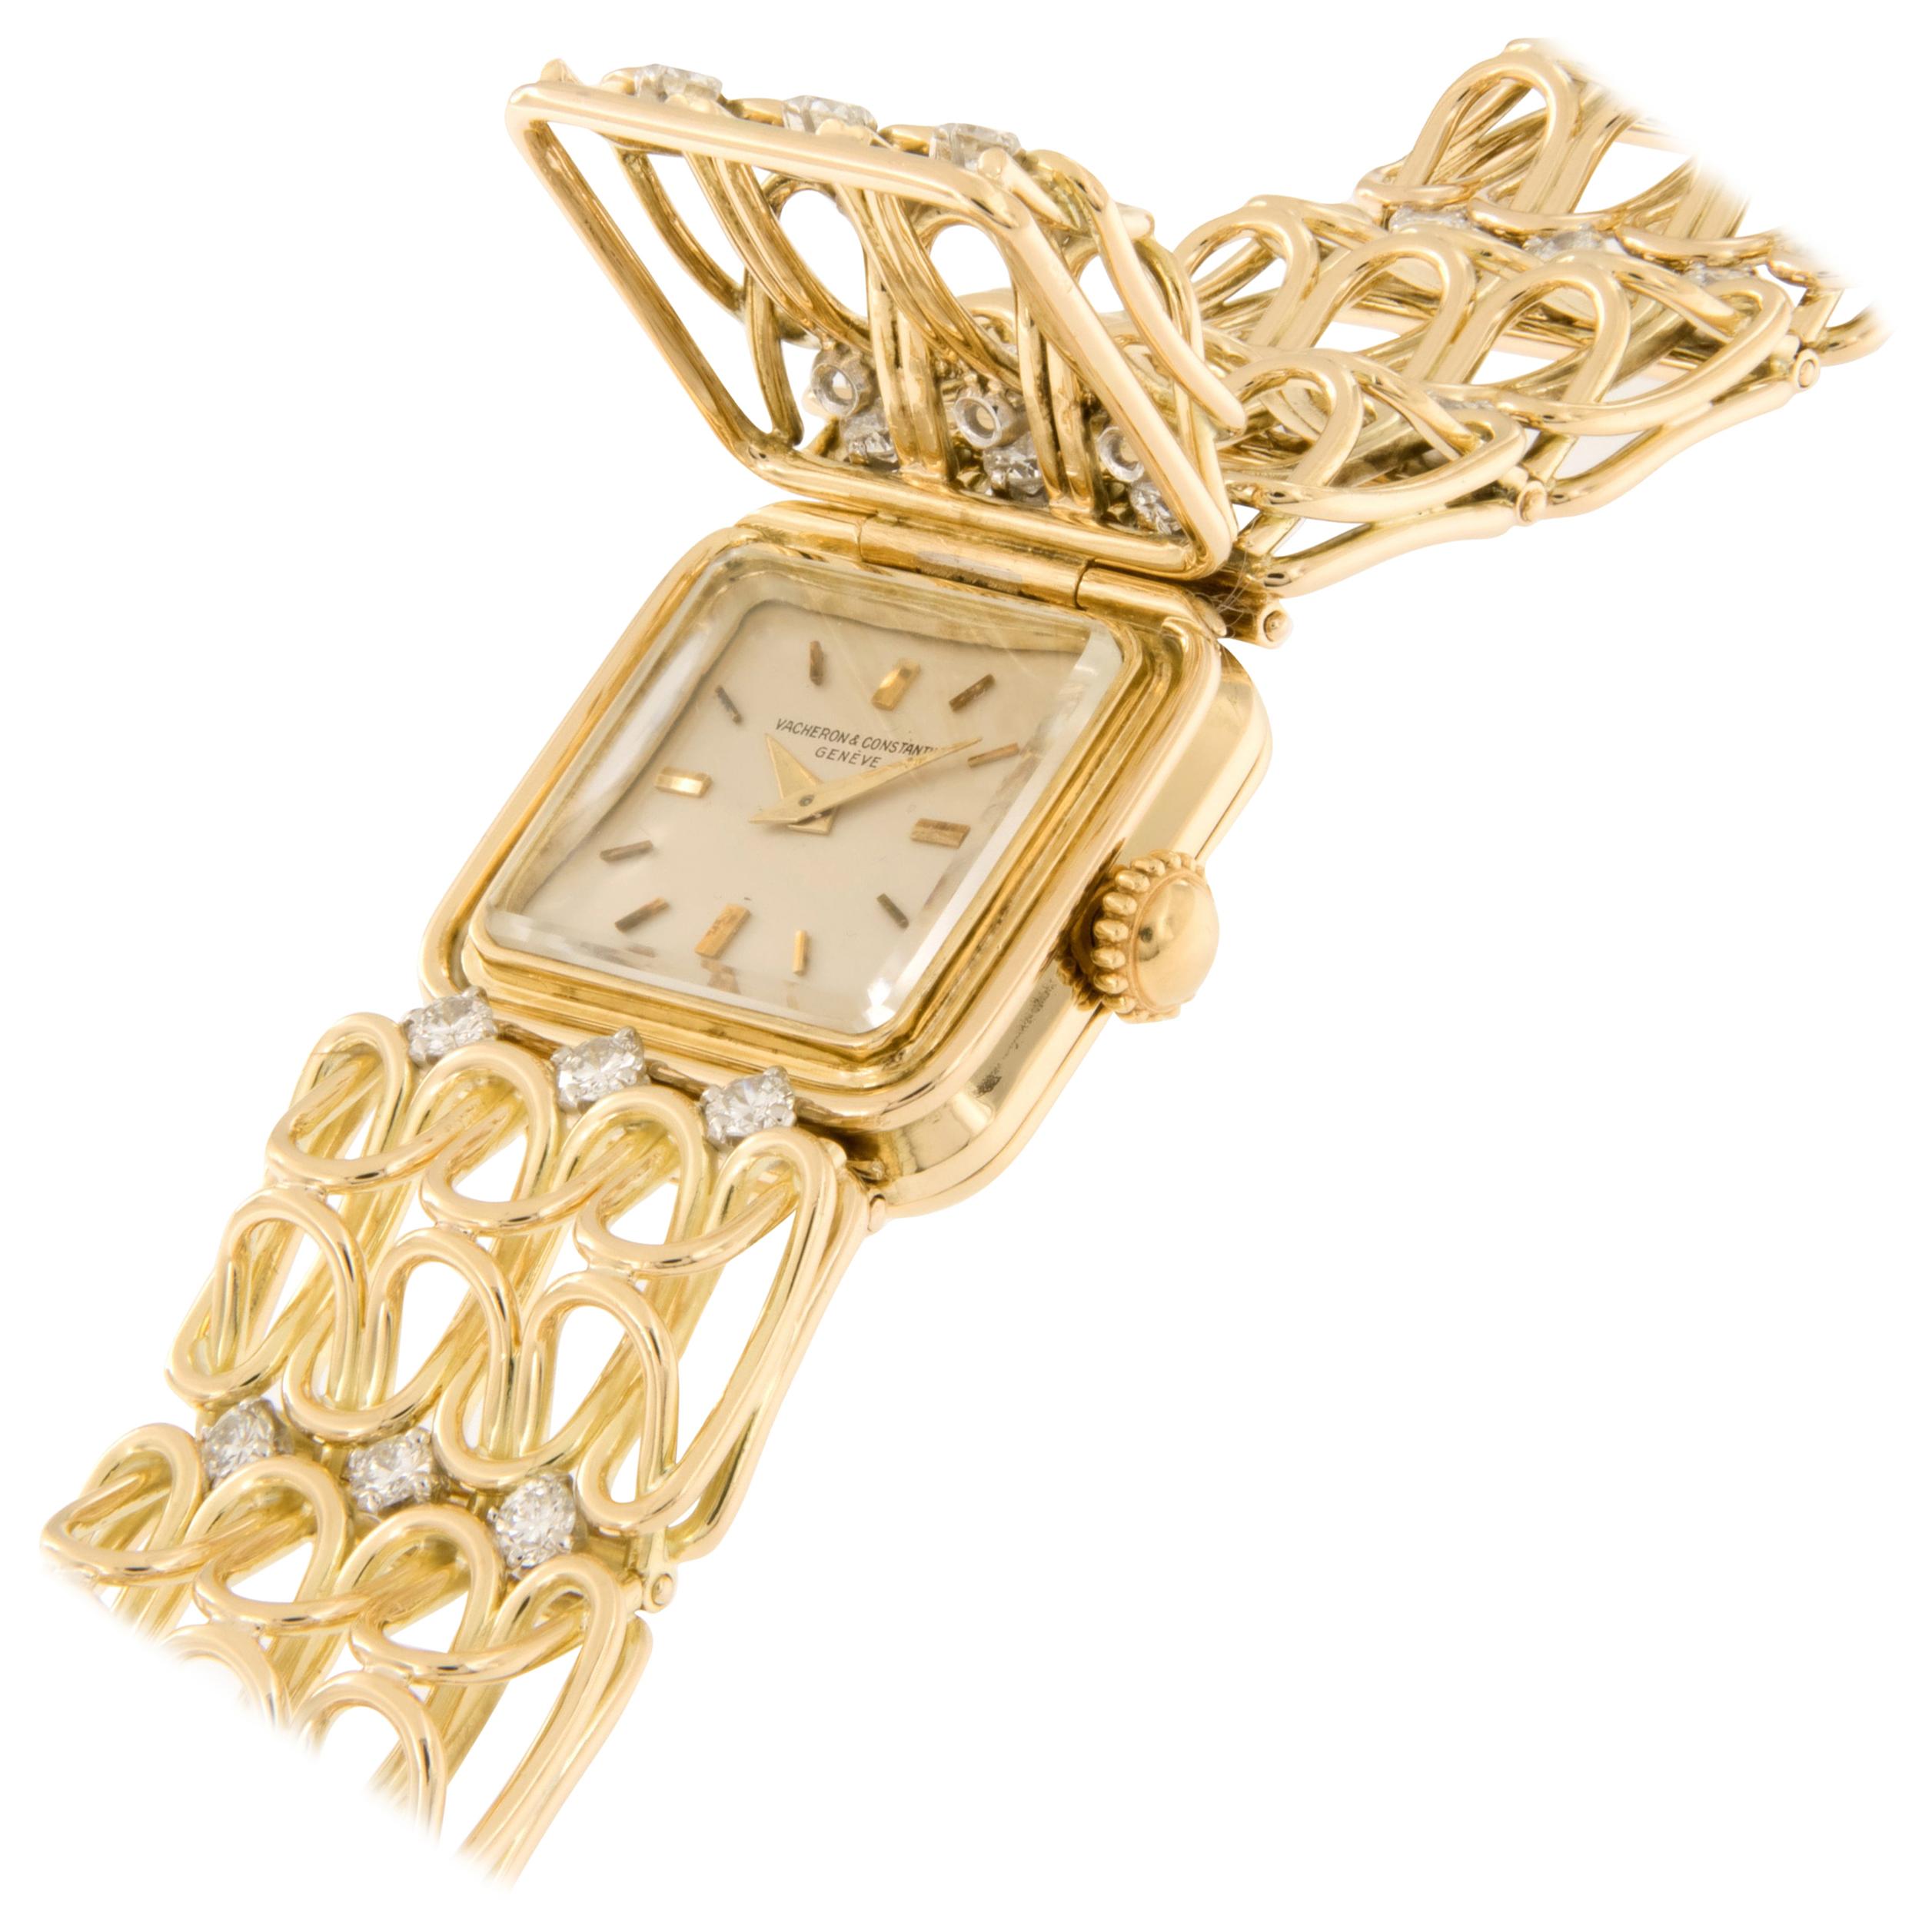 Vacheron and Constantin Gold and Diamond Bracelet Watch